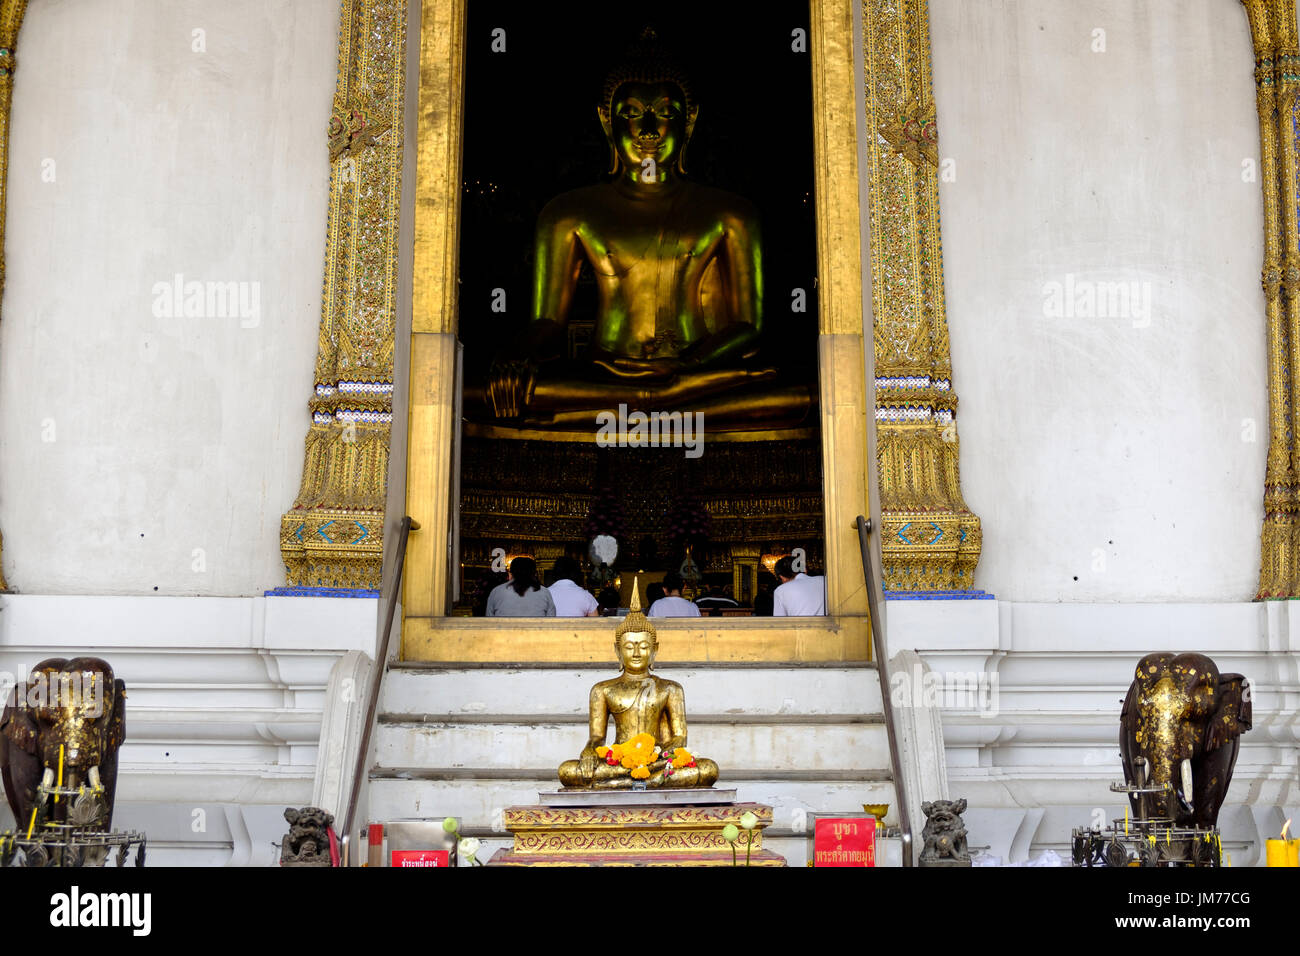 Statua di Buddha e persone in preghiera si vede attraverso l'ingresso A principale sala da preghiera di Wat Suthat Thepwararam, un tempio buddista a Bangkok, in Thailandia. Foto Stock